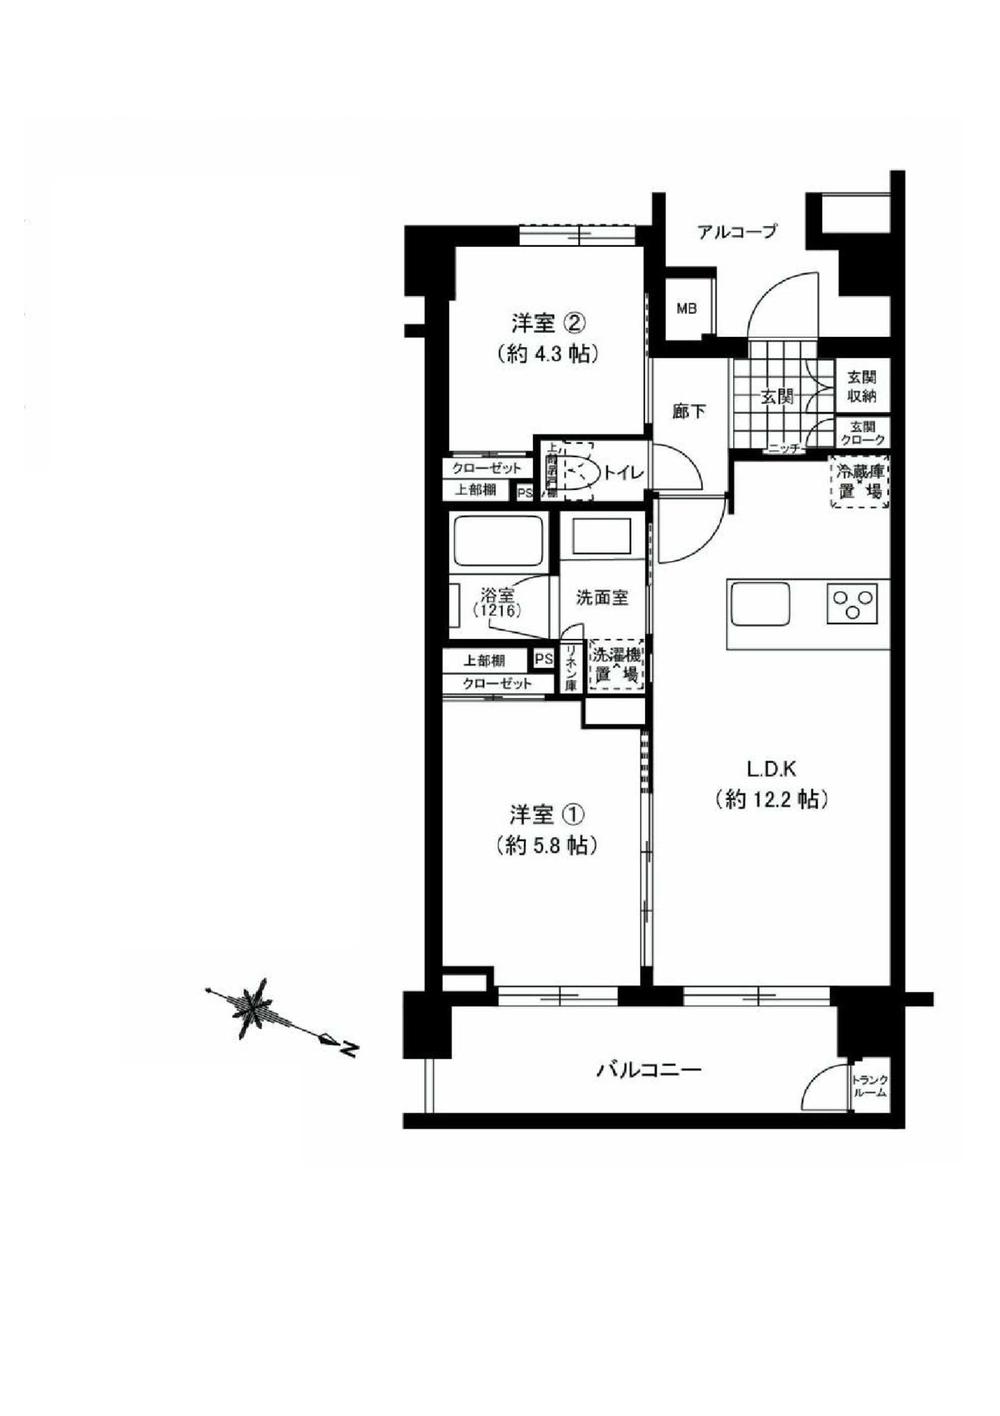 Floor plan. 2LDK, Price 36,800,000 yen, Occupied area 50.45 sq m , Balcony area 7.65 sq m